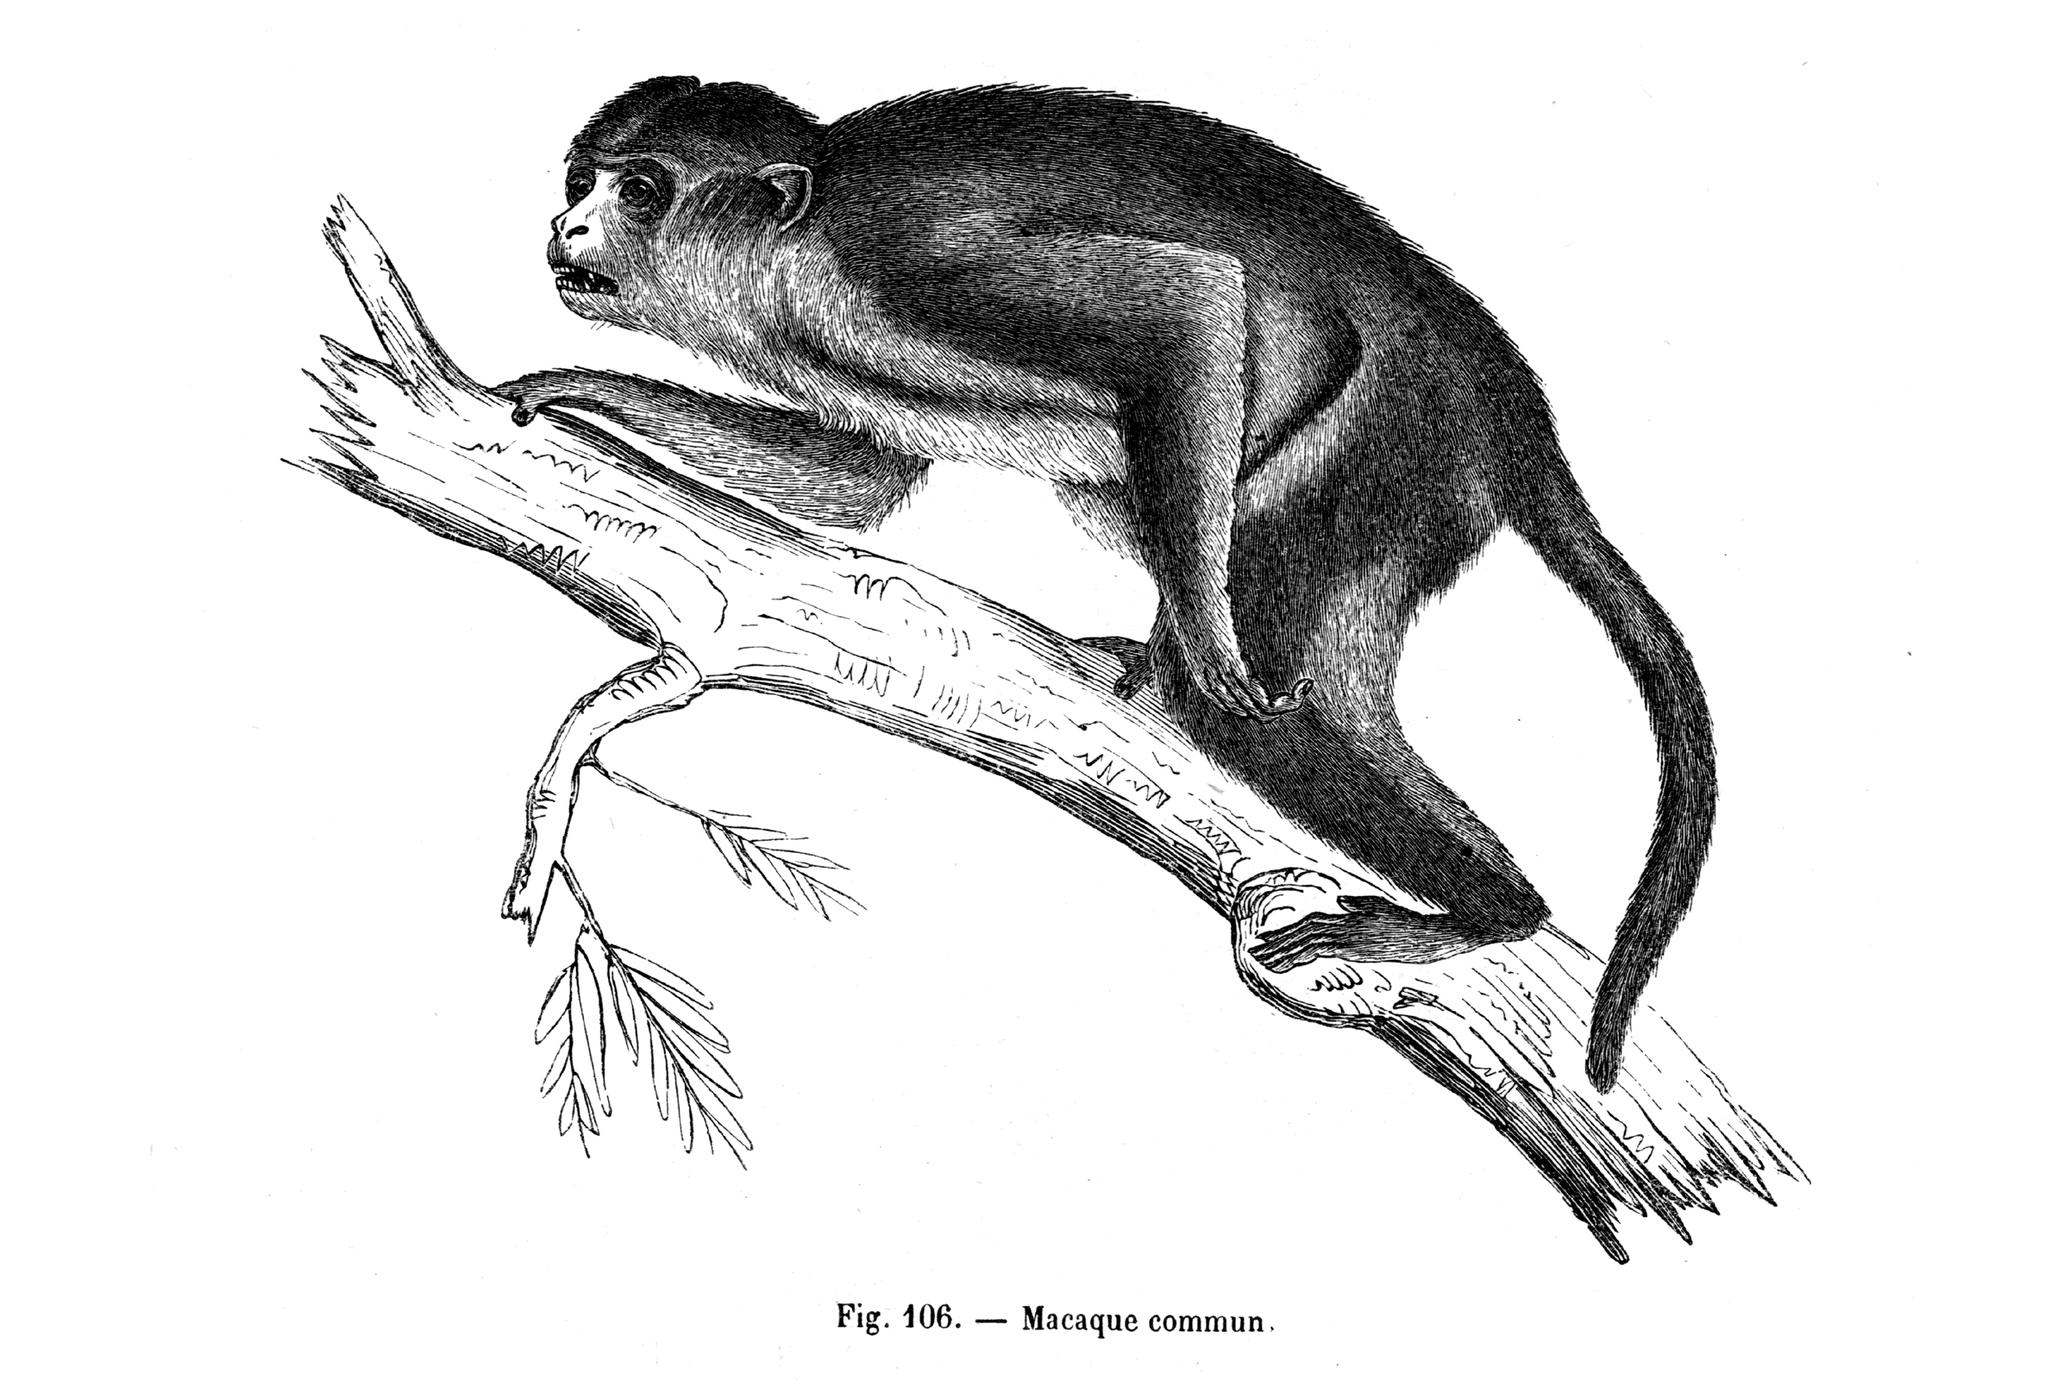 Macaque commun